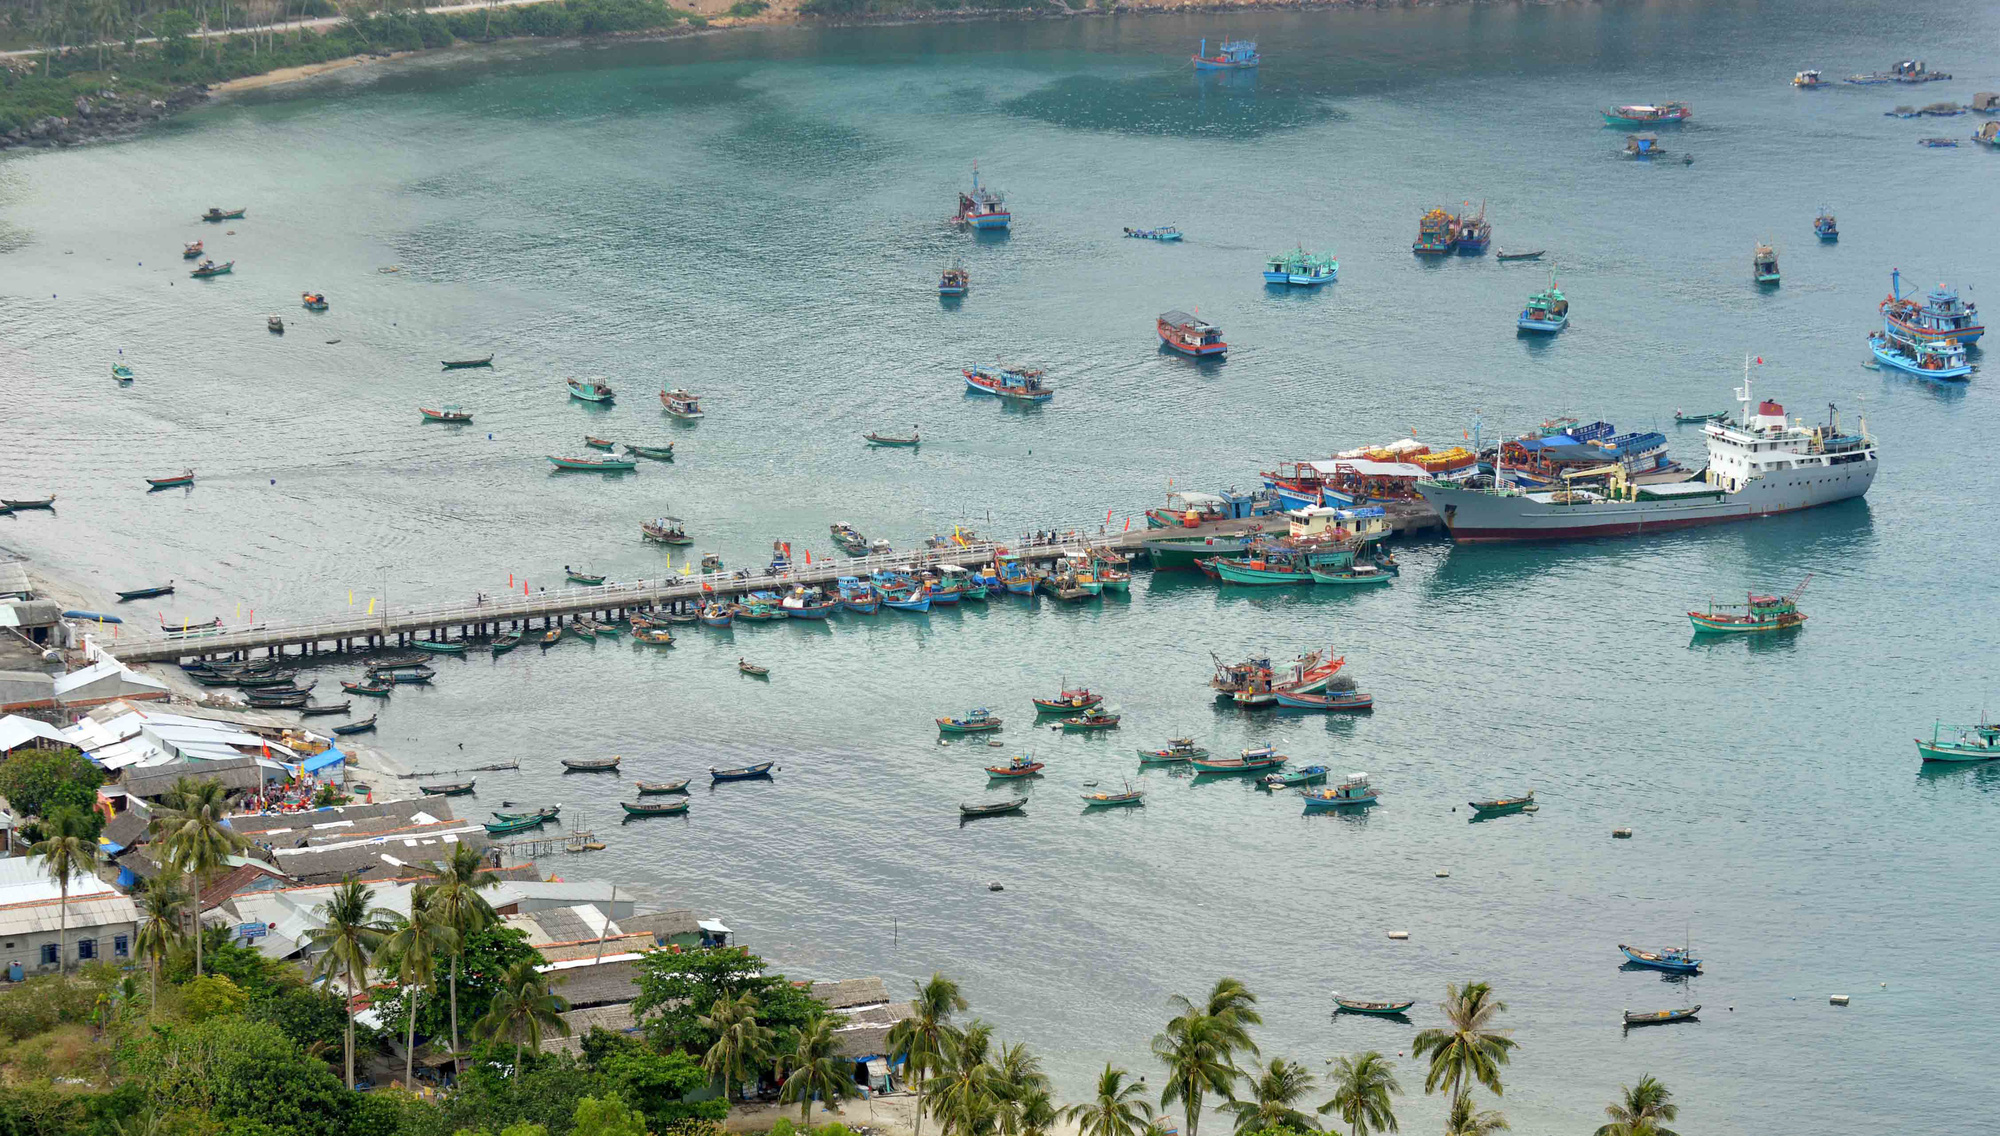 Boats are docked at Bai Ngu Pier on Tho Chau islands off Kien Giang Province, Vietnam.